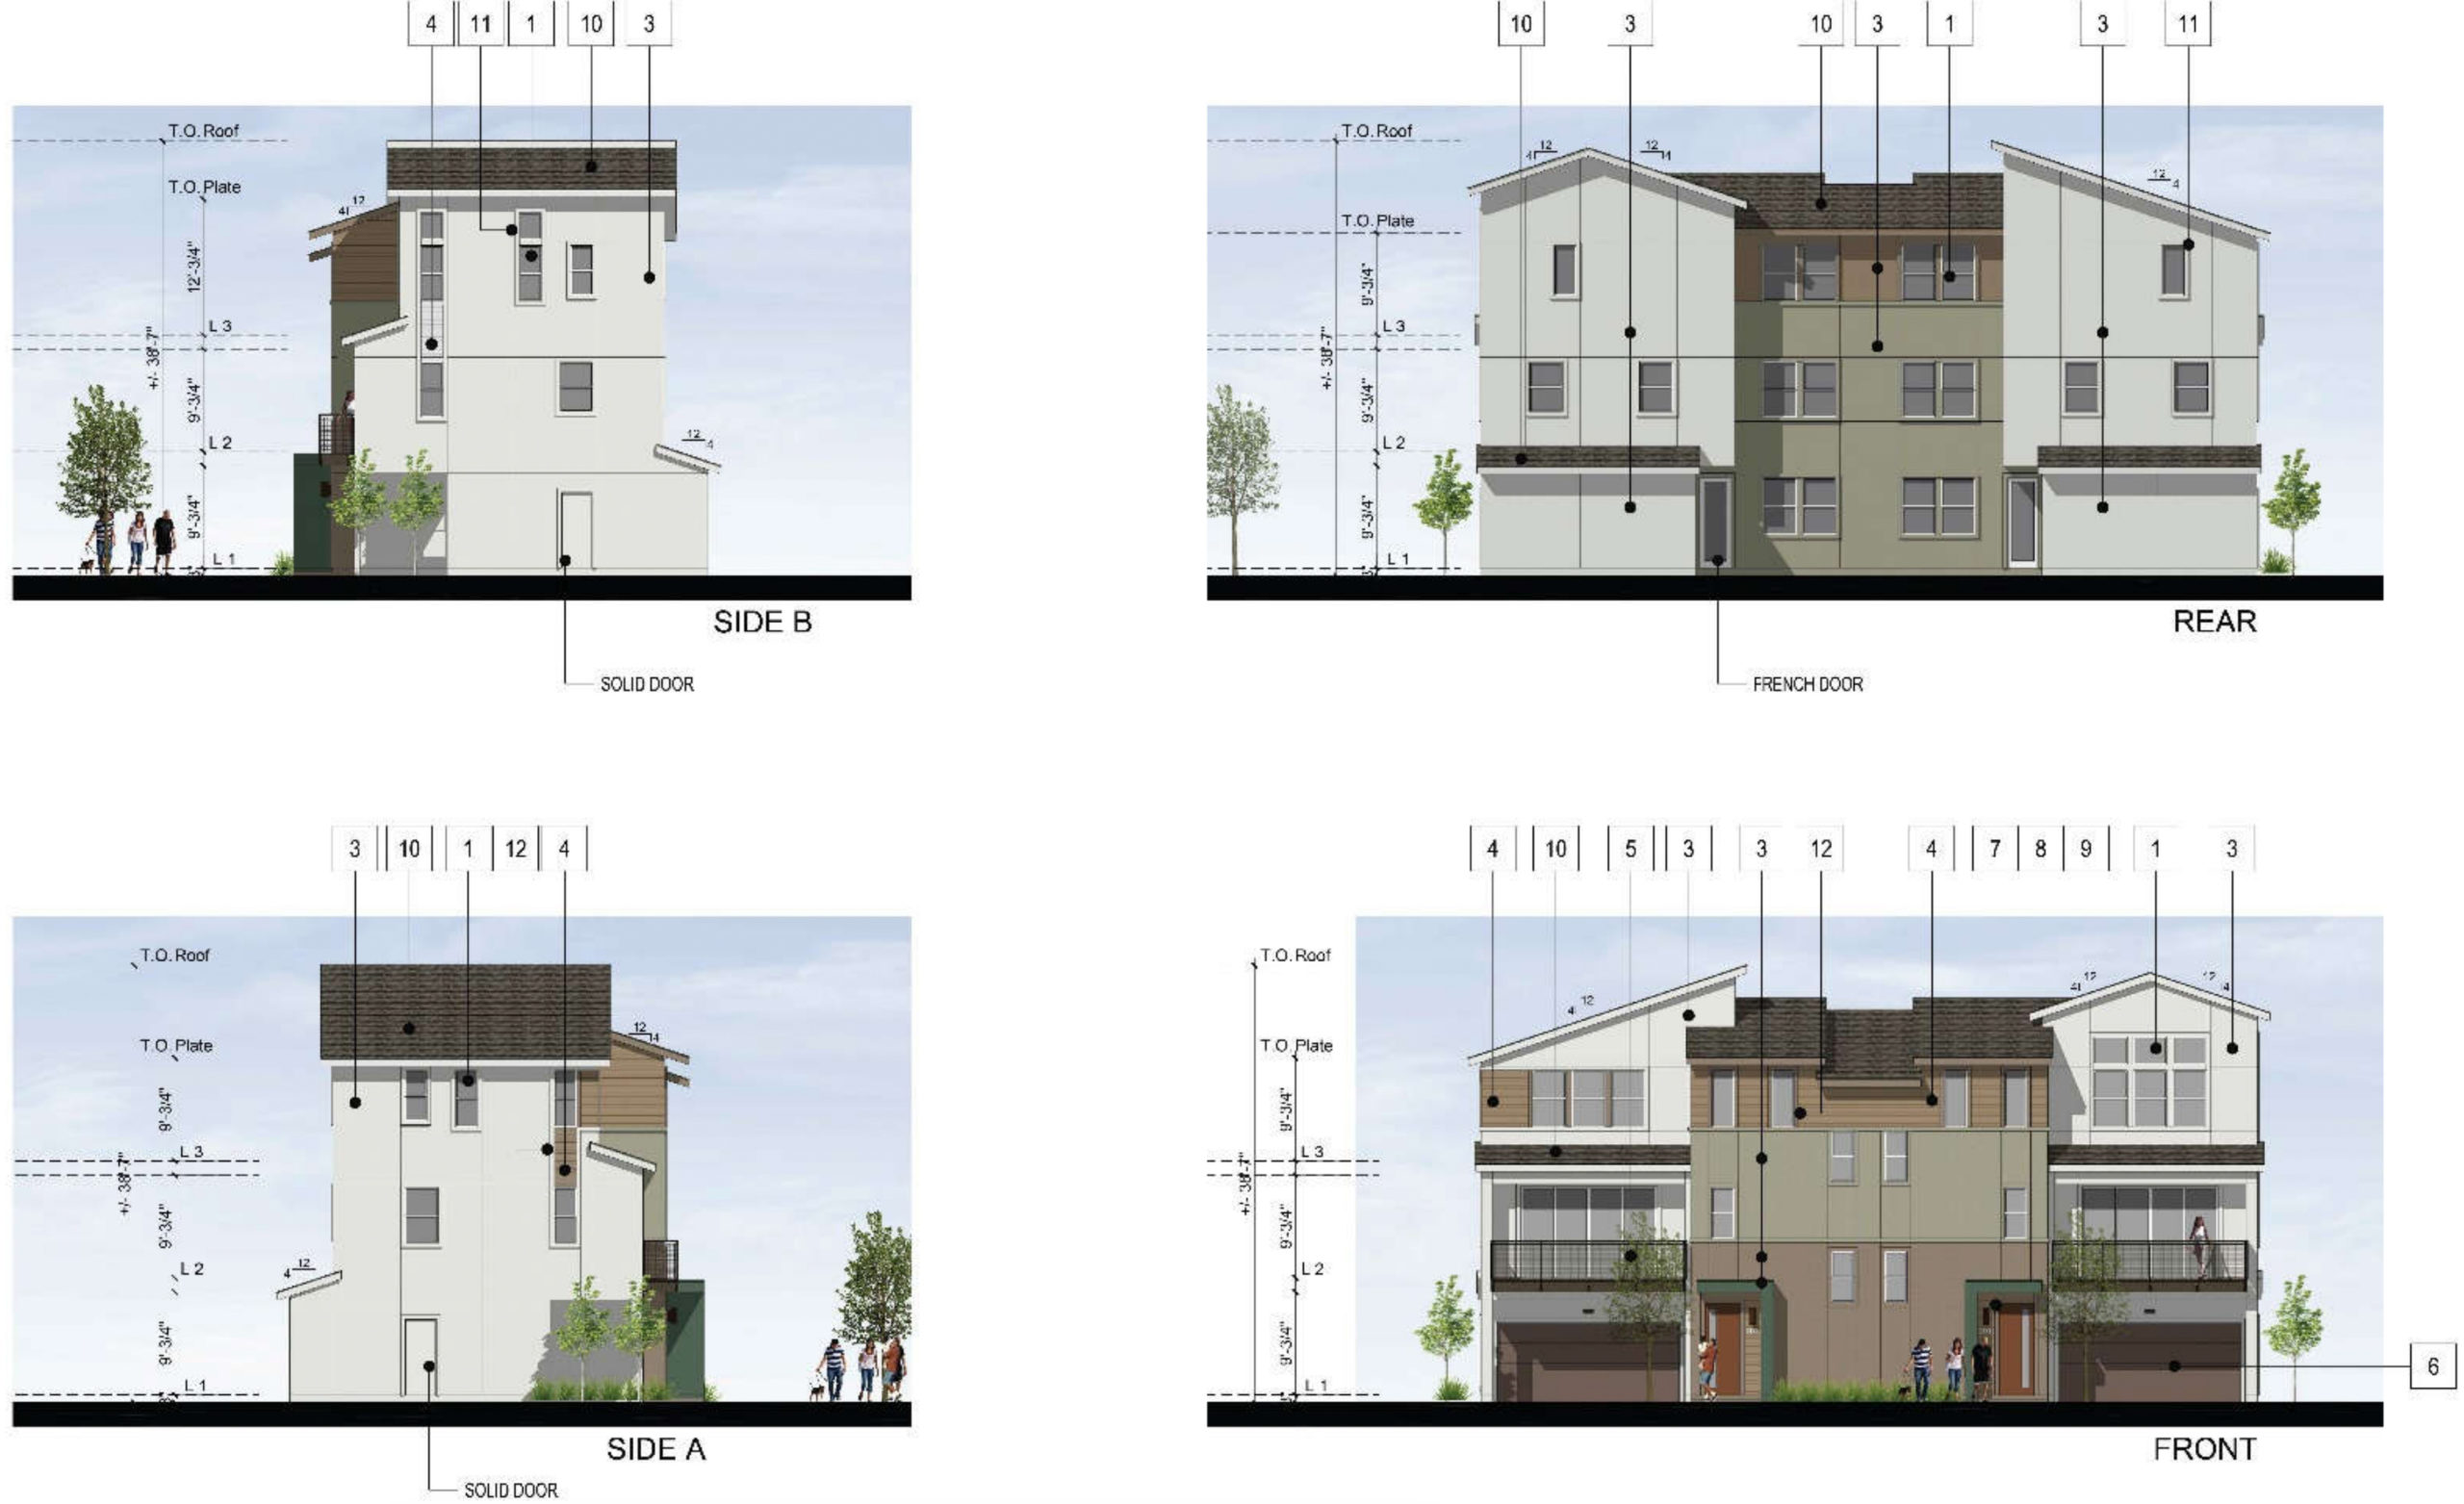 Senter Road Residential Project, rendering by RJA